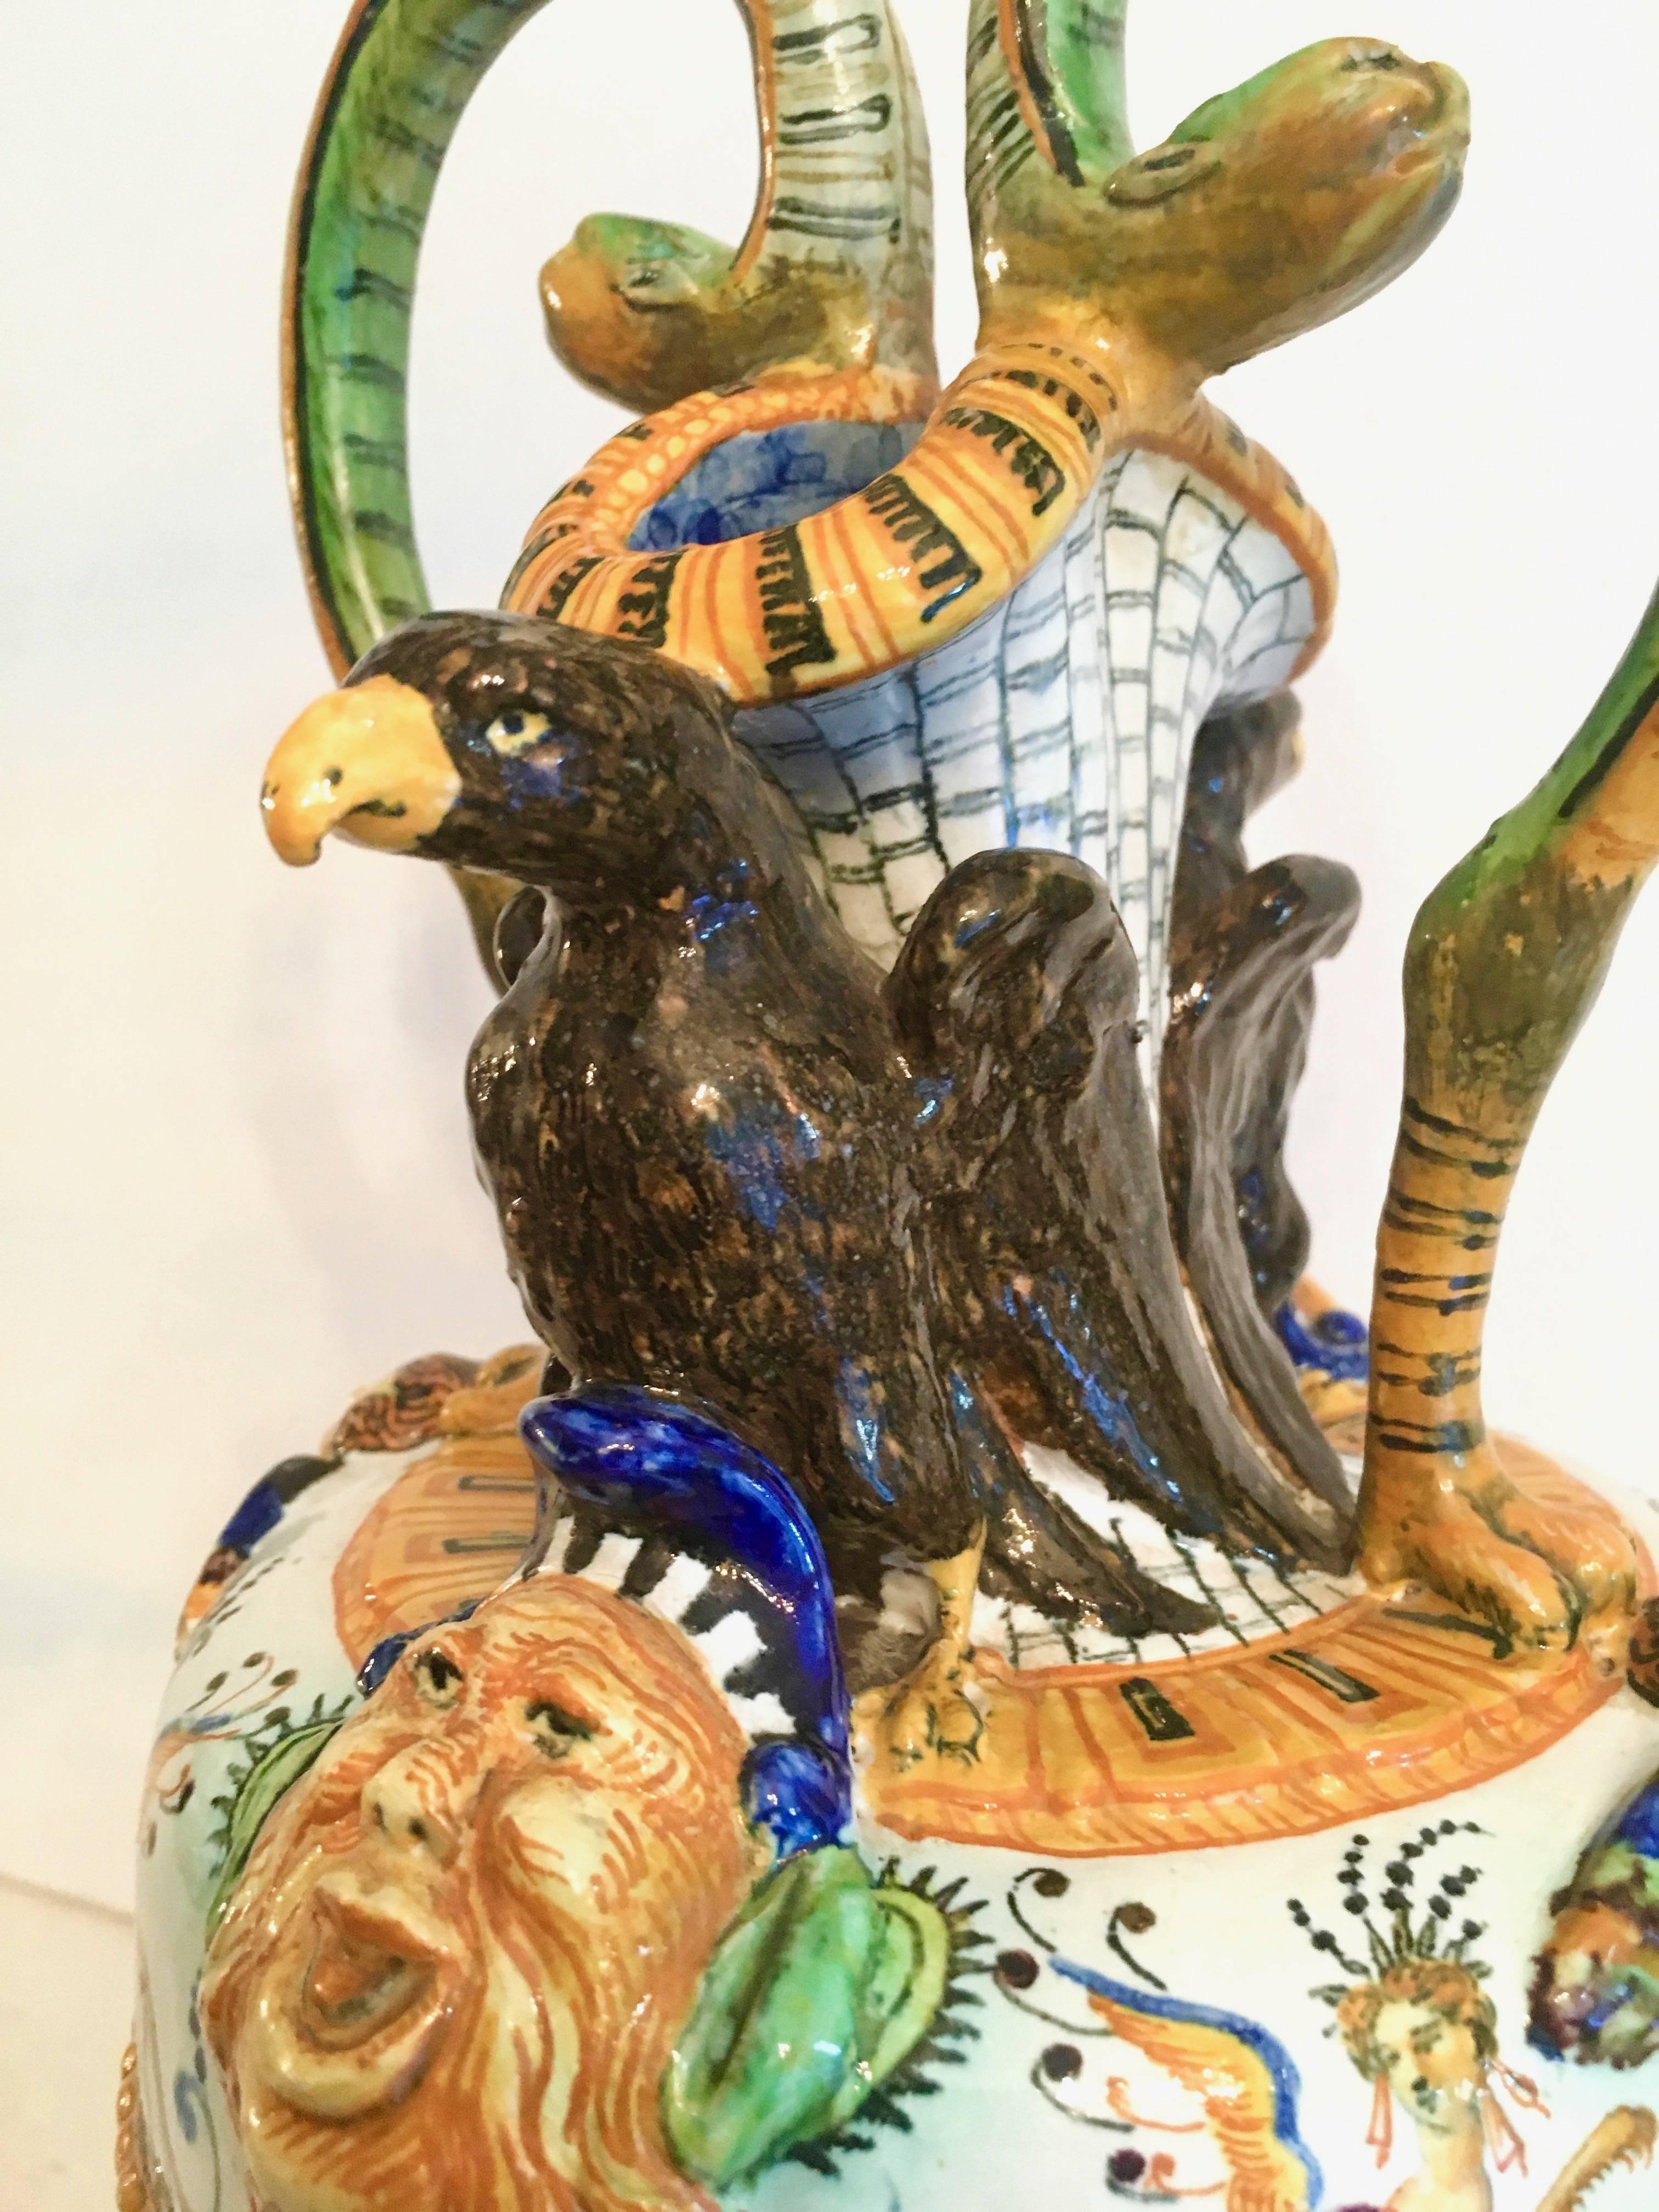 Renaissance Exceptional Majolica Urn Vase with Serpent Handles and Mythological Figures For Sale